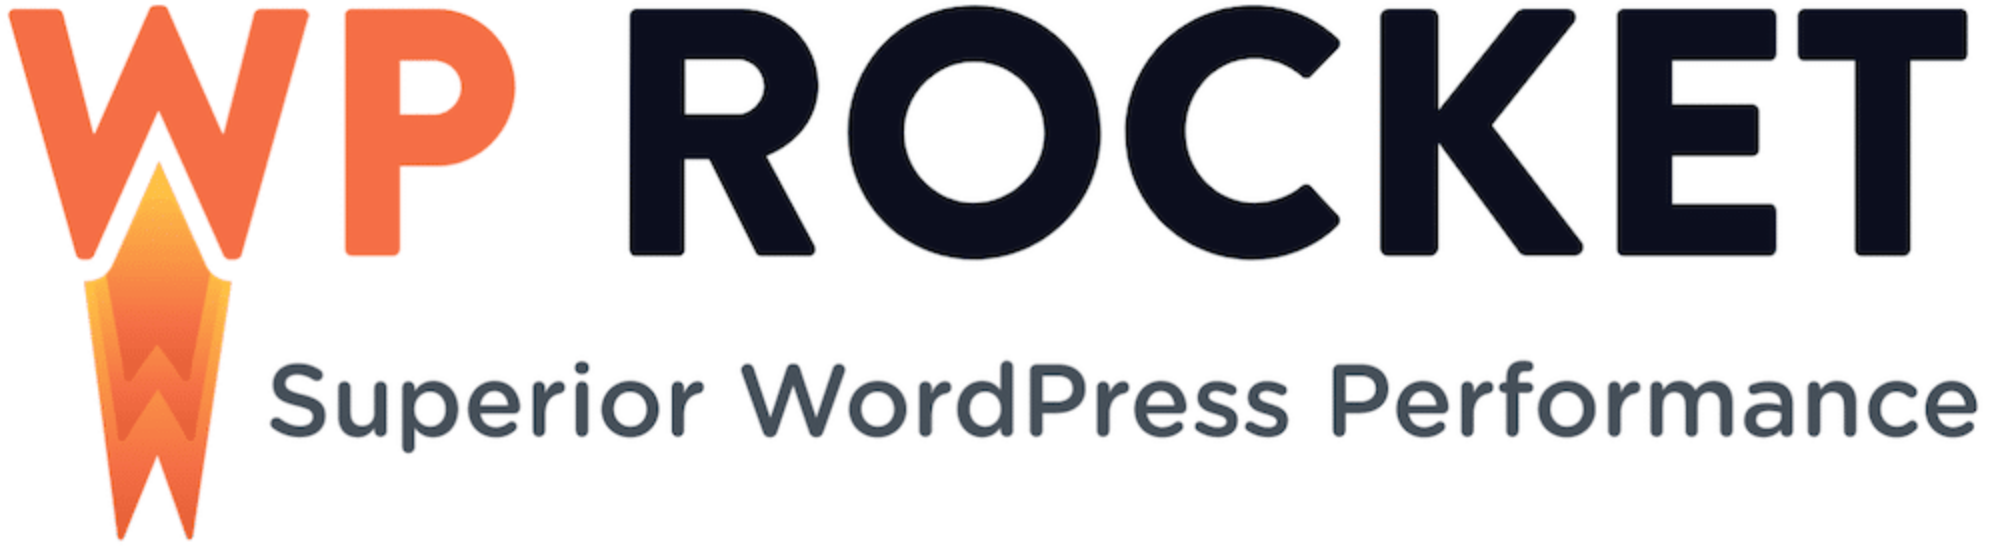 plugin cache wordpress wp rocket